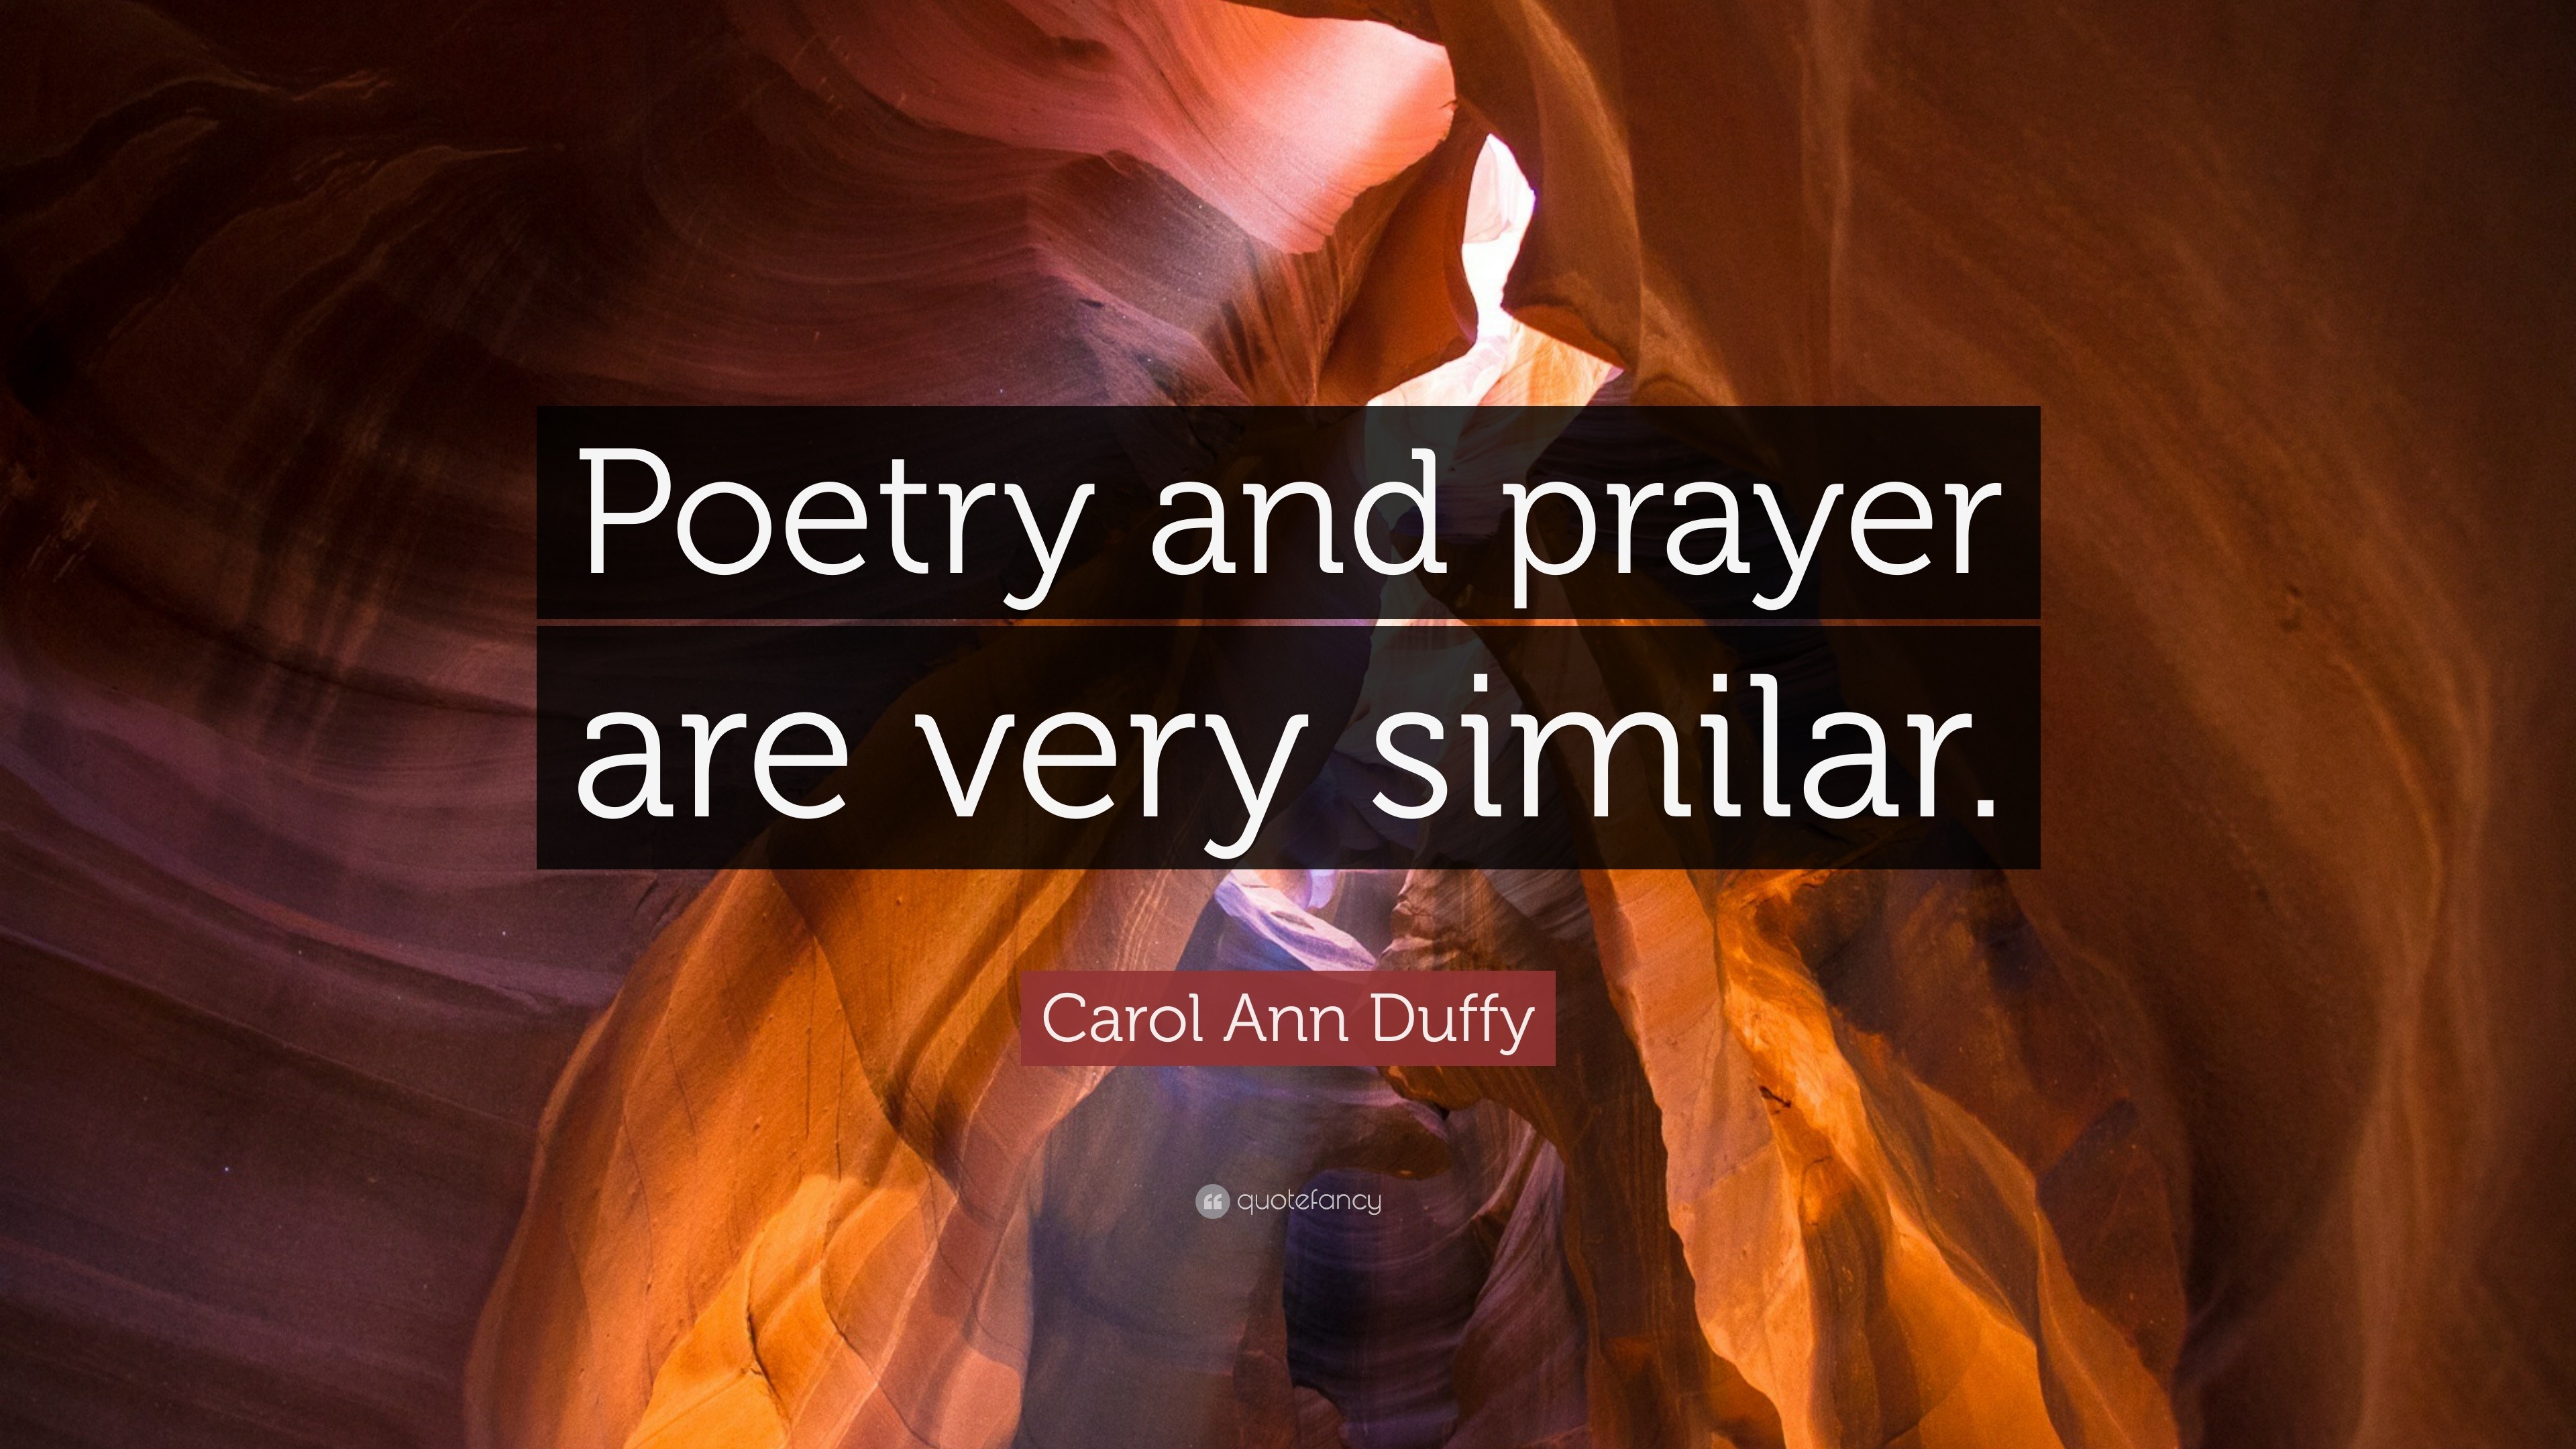 Carol Ann Duffy “Poetry and prayer are very similar.”